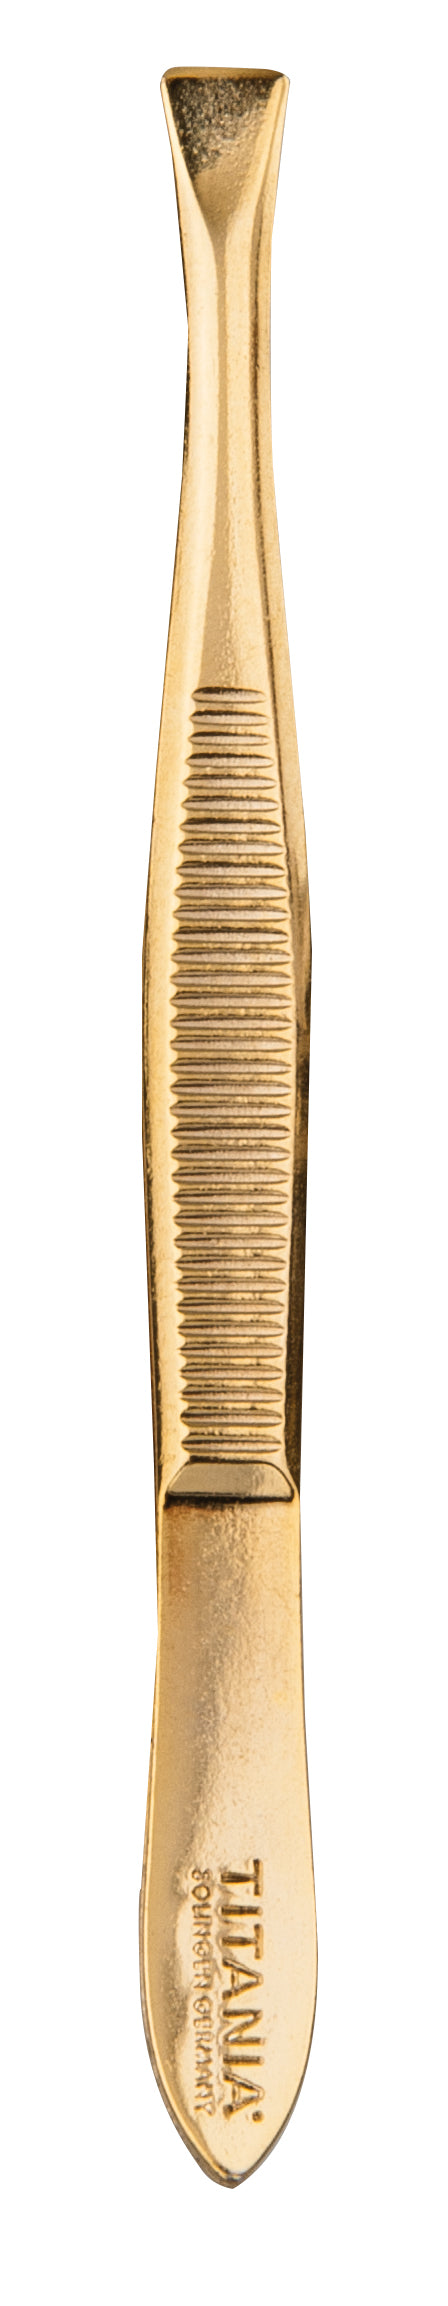 Titania Tweezer Solingen Gold 8cm 1060/GGA